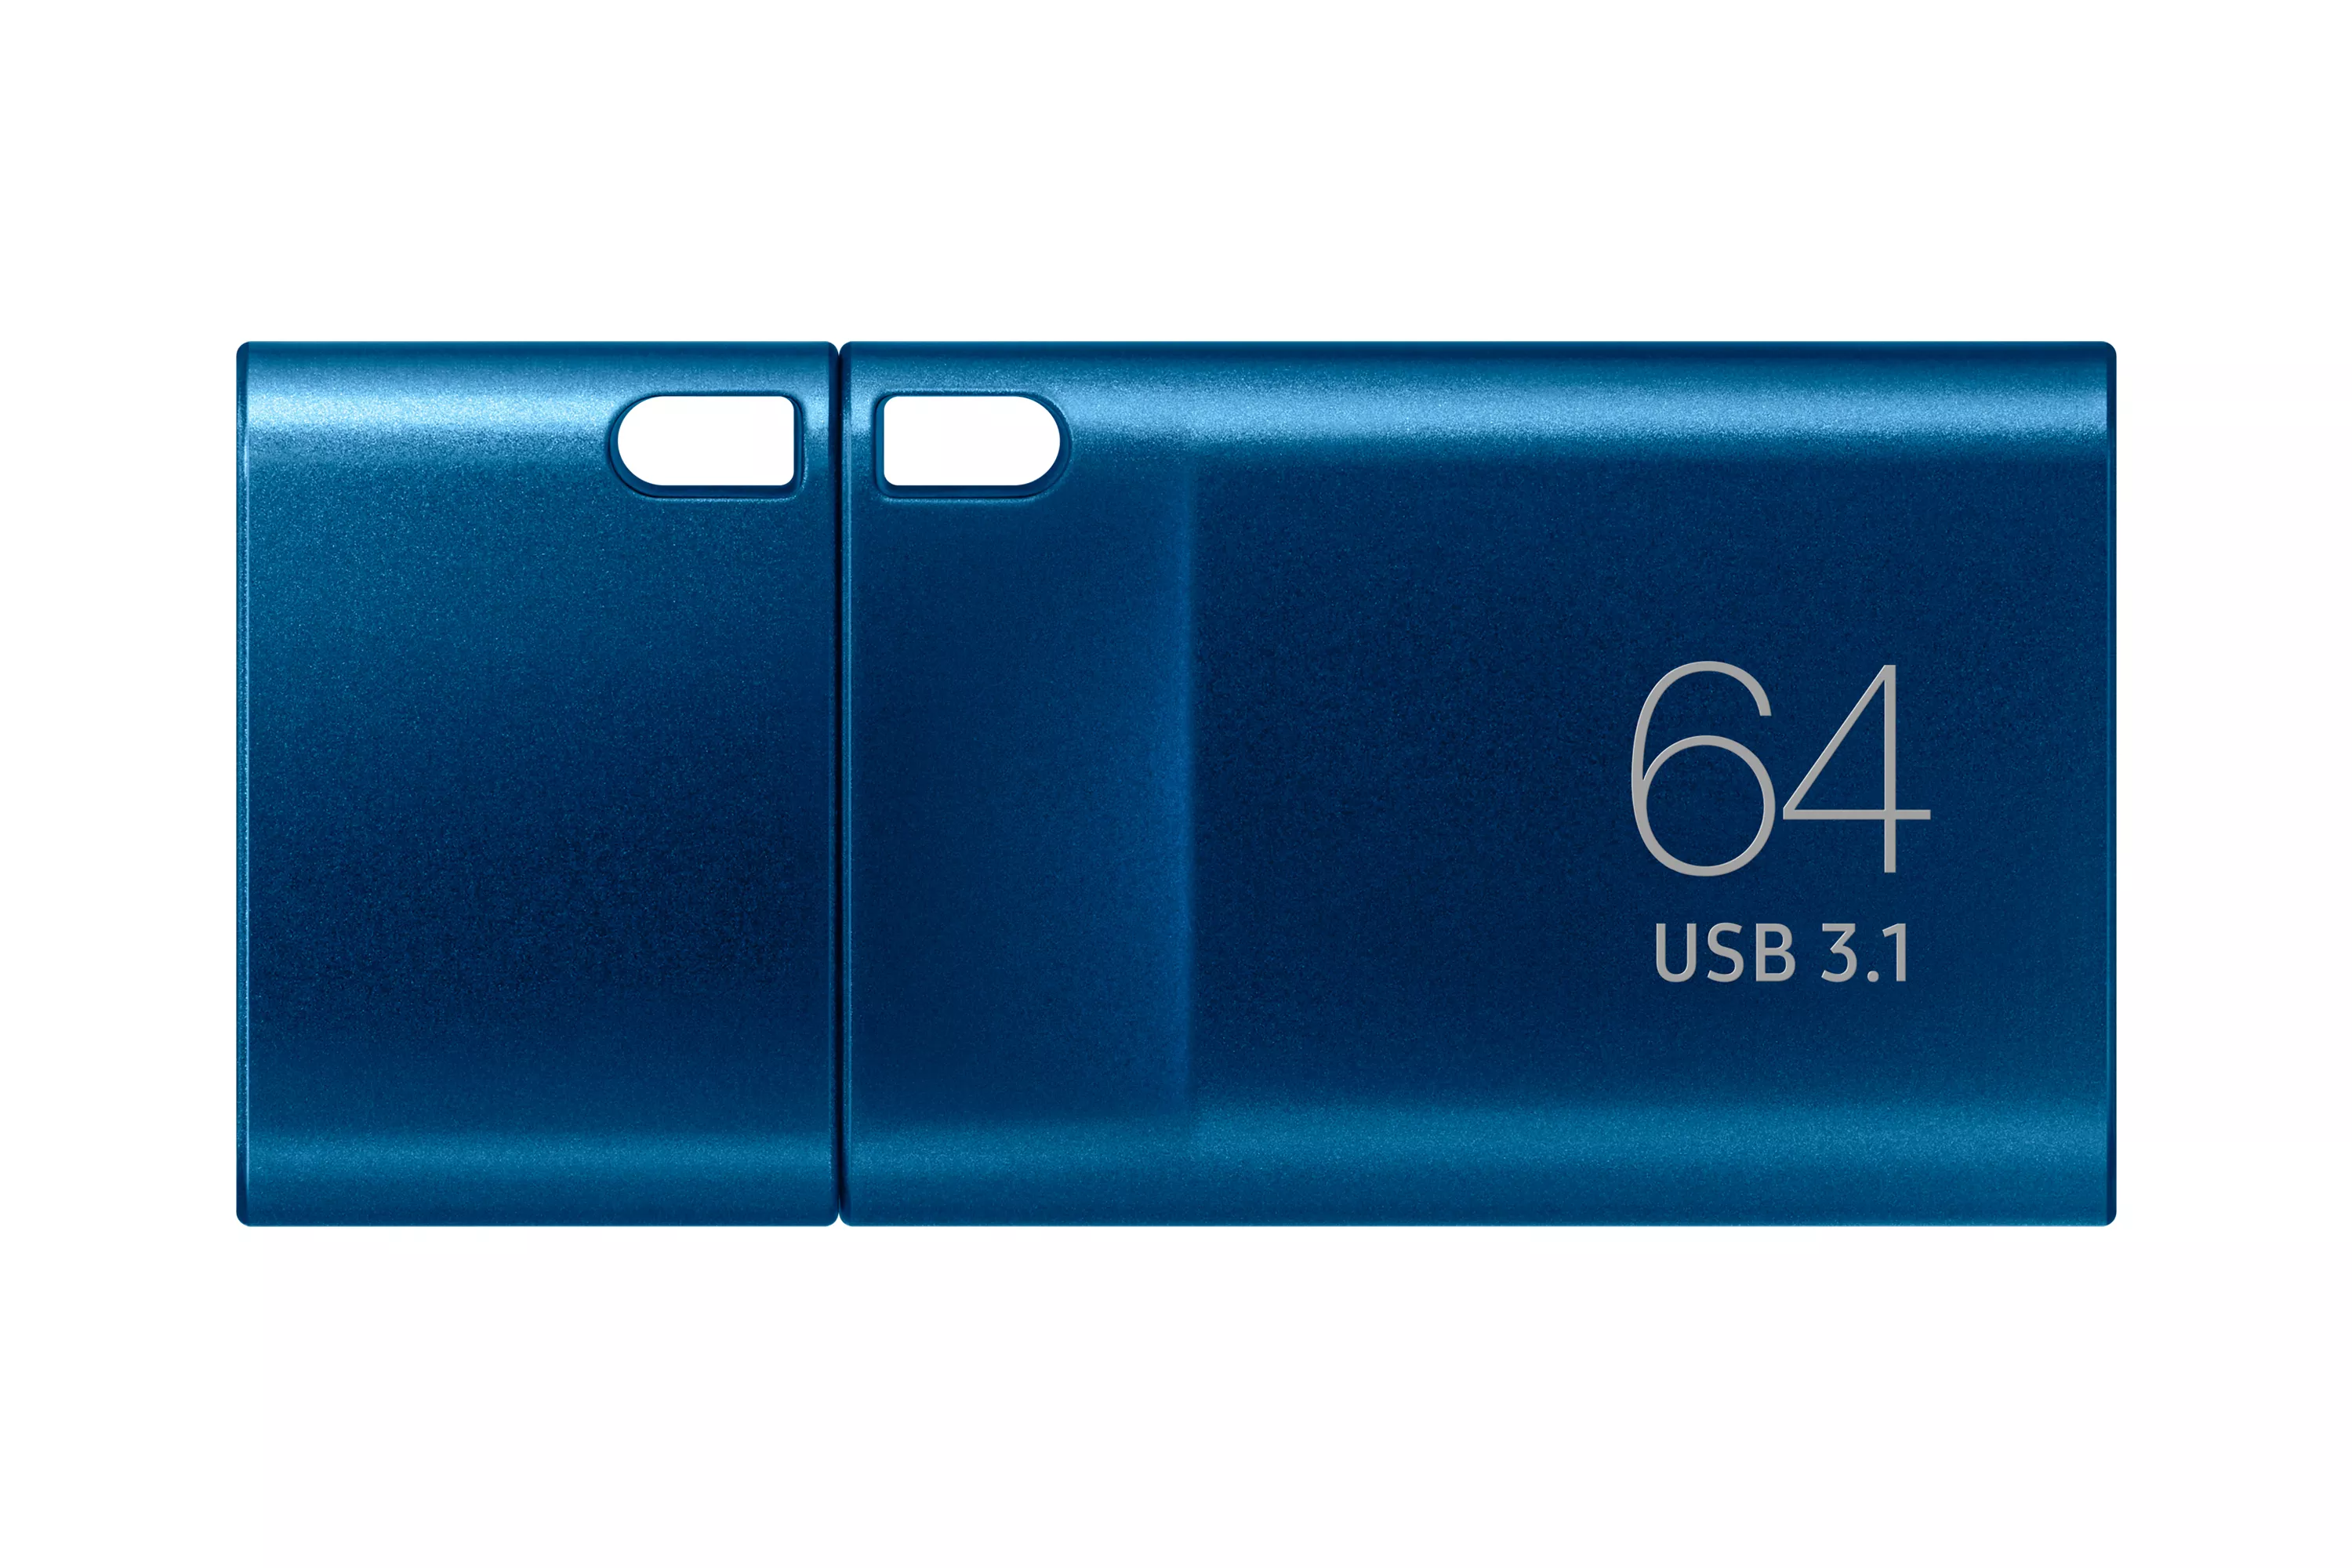 Vente SAMSUNG USB Type-C 64Go 300Mo/s USB 3.1 Flash Samsung au meilleur prix - visuel 4